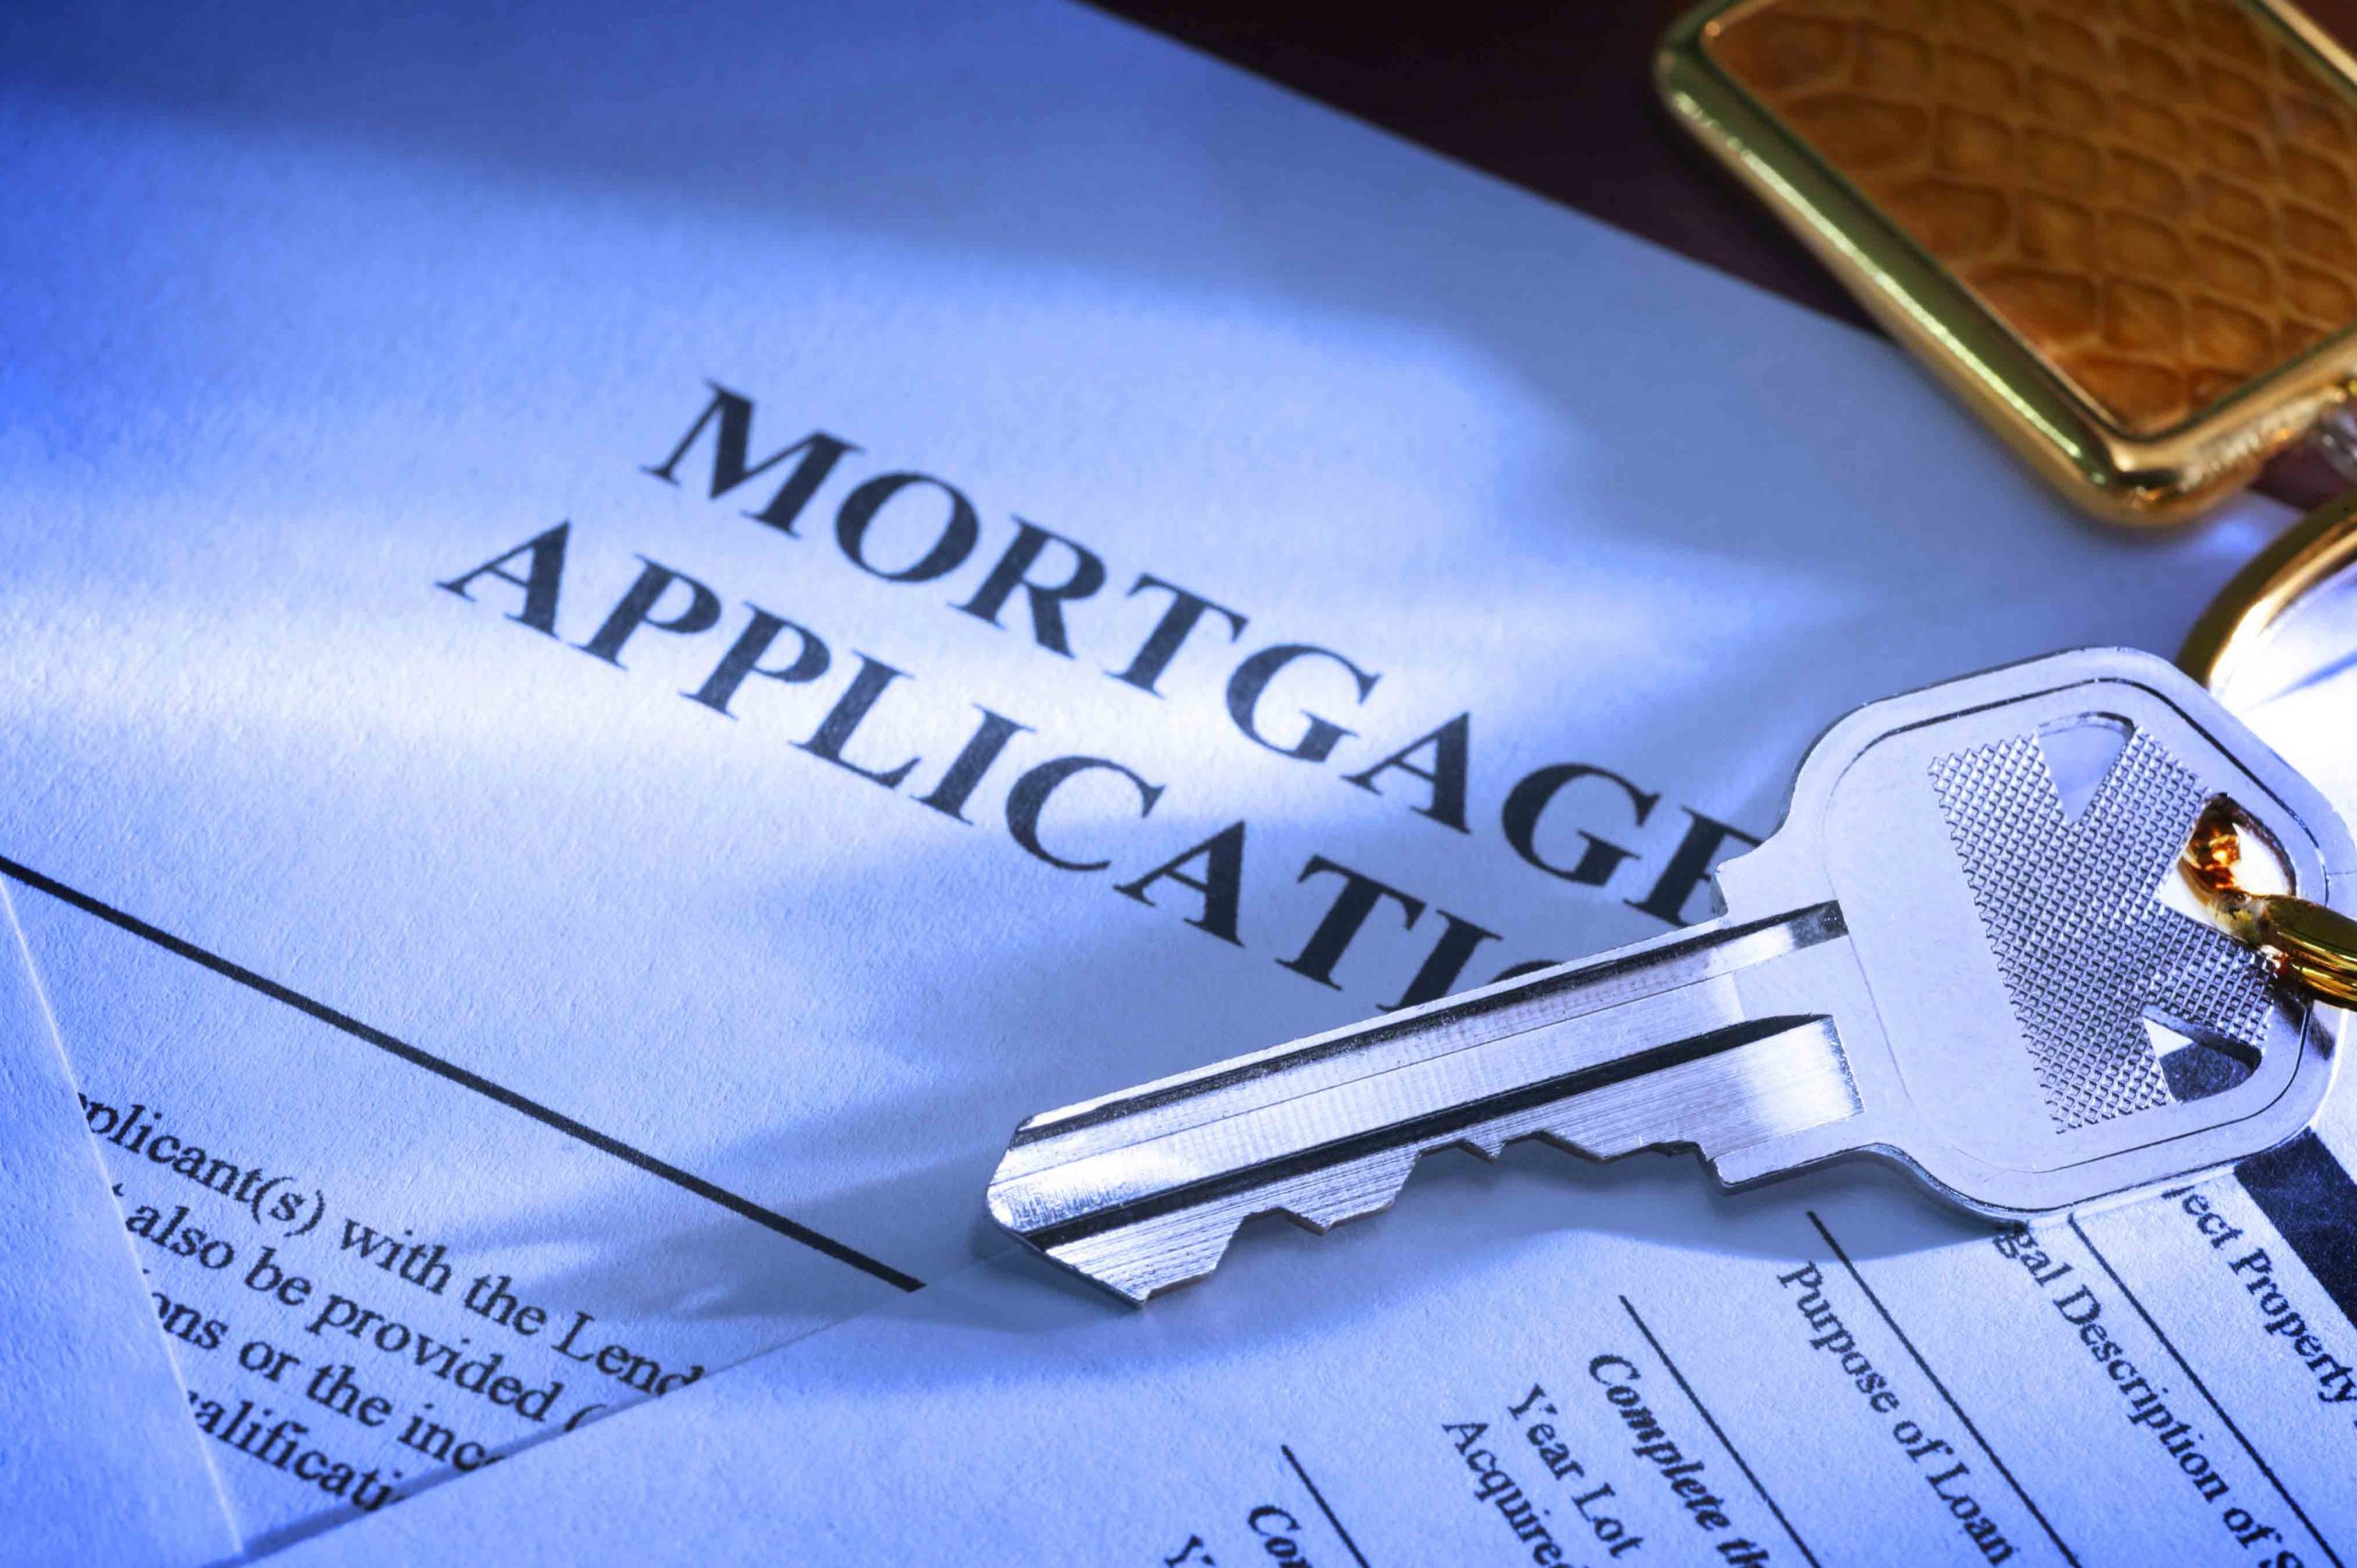 Preferred Mortgage Lenders